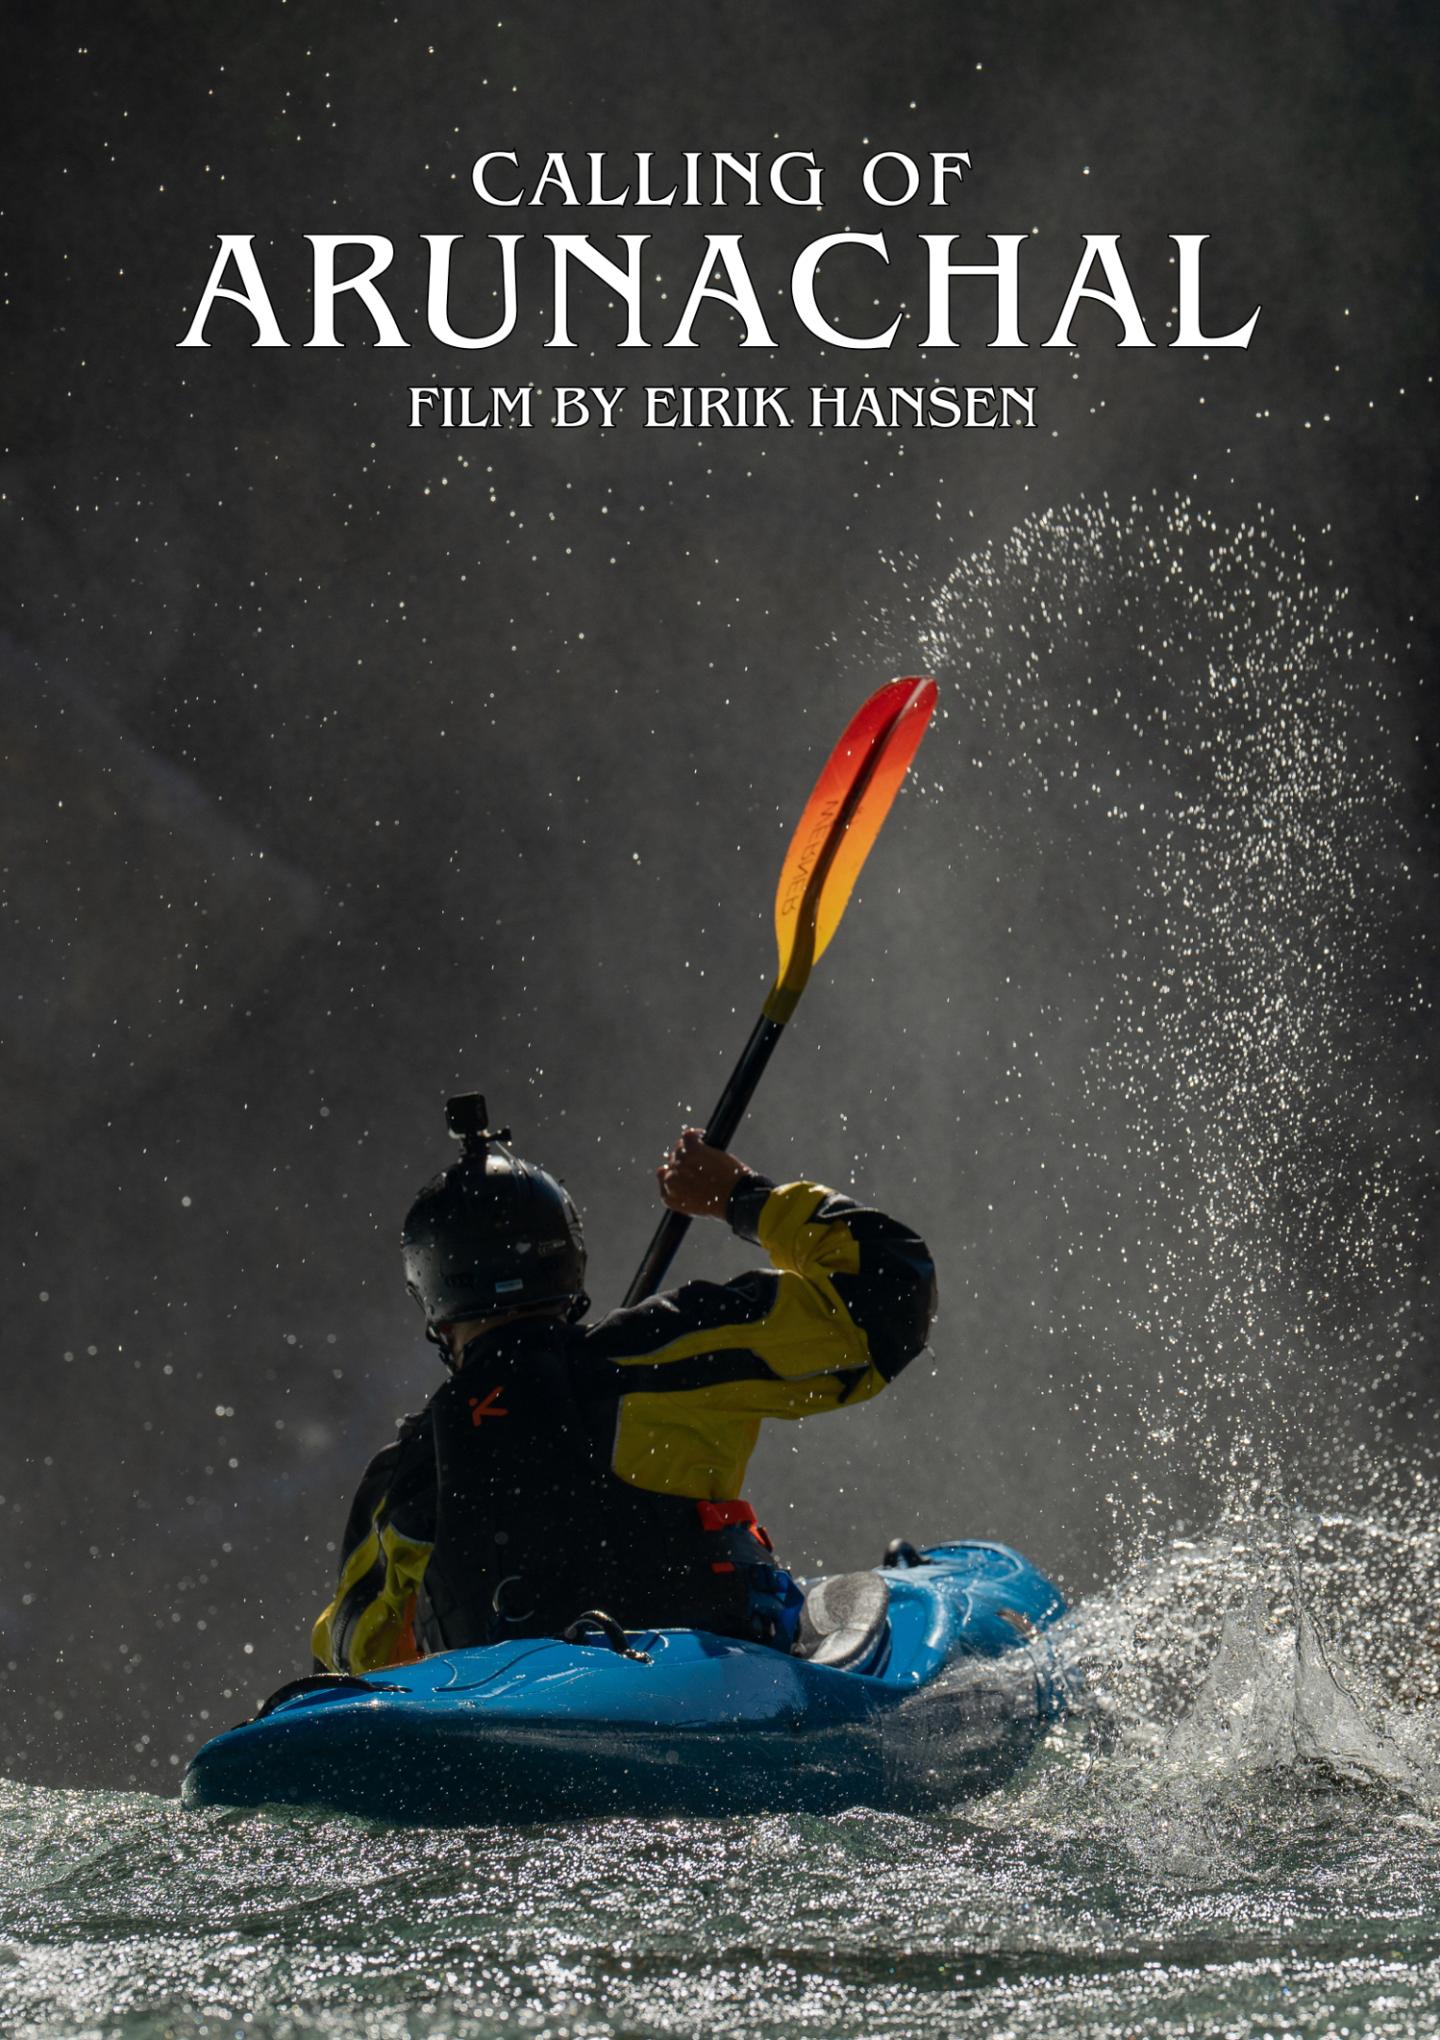 Plakat for 'Calling Of Arunachal'